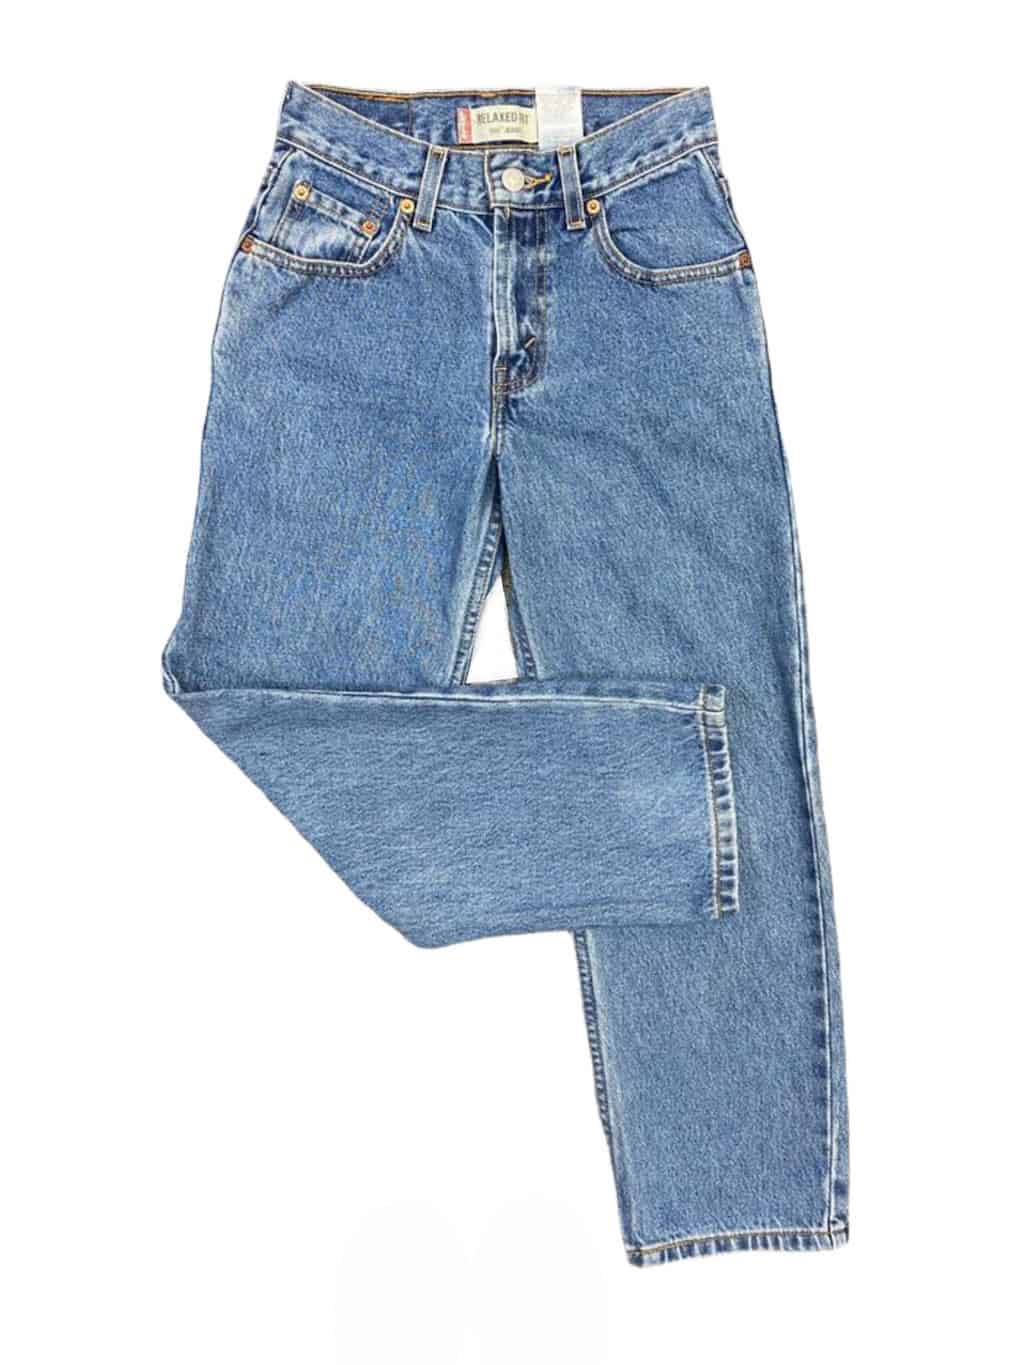 Y2K Levis 550 stonewash blue denim jeans, relaxed fit - W25 x L25 - St Cyr  Vintage